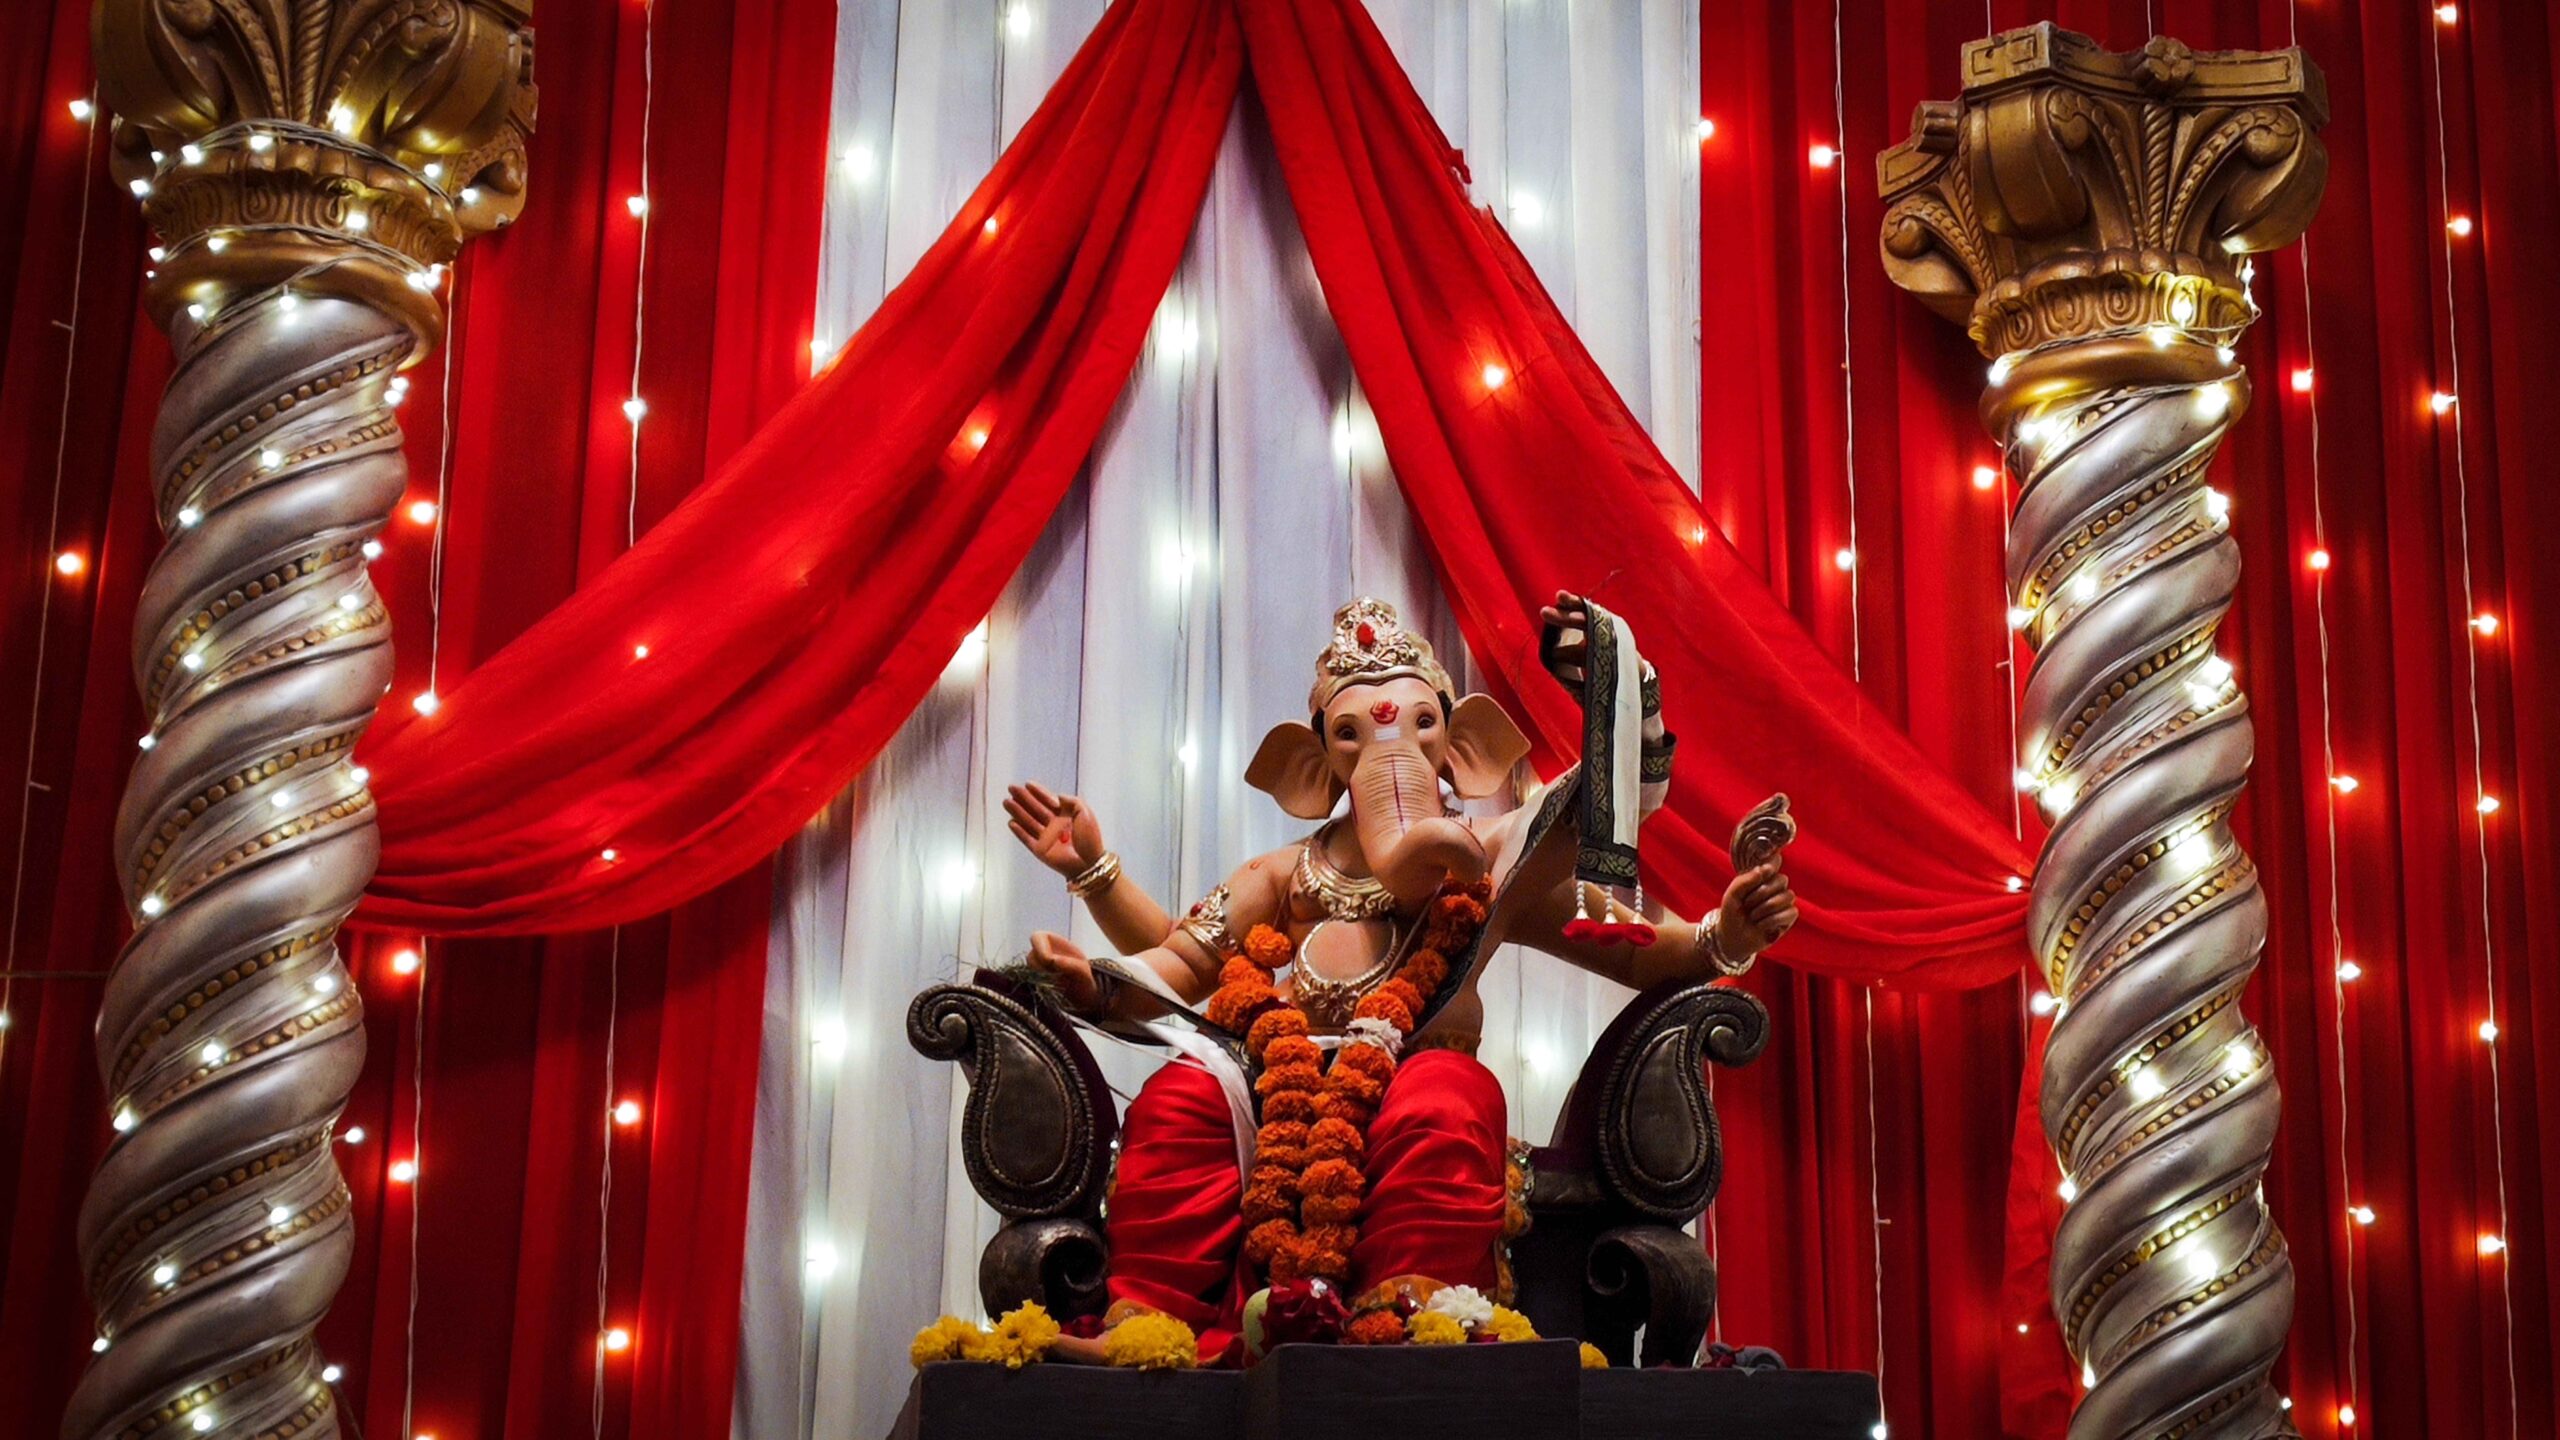 Home Lord Ganesha Image HD 